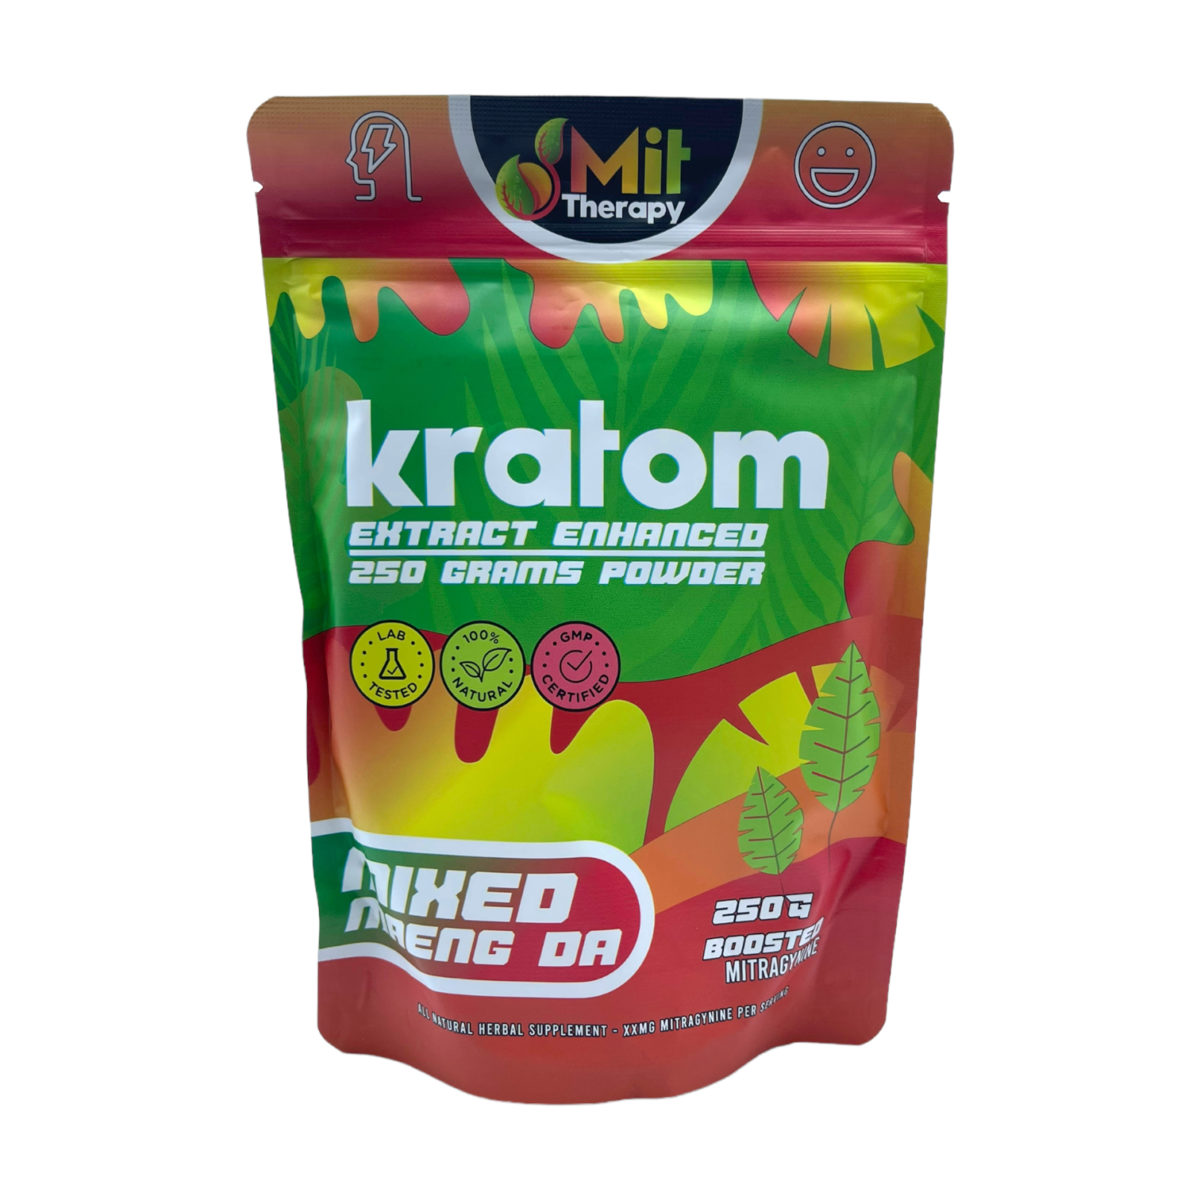 MIT Therapy Mixed Maeng Da Extract Enhanced Kratom Powder